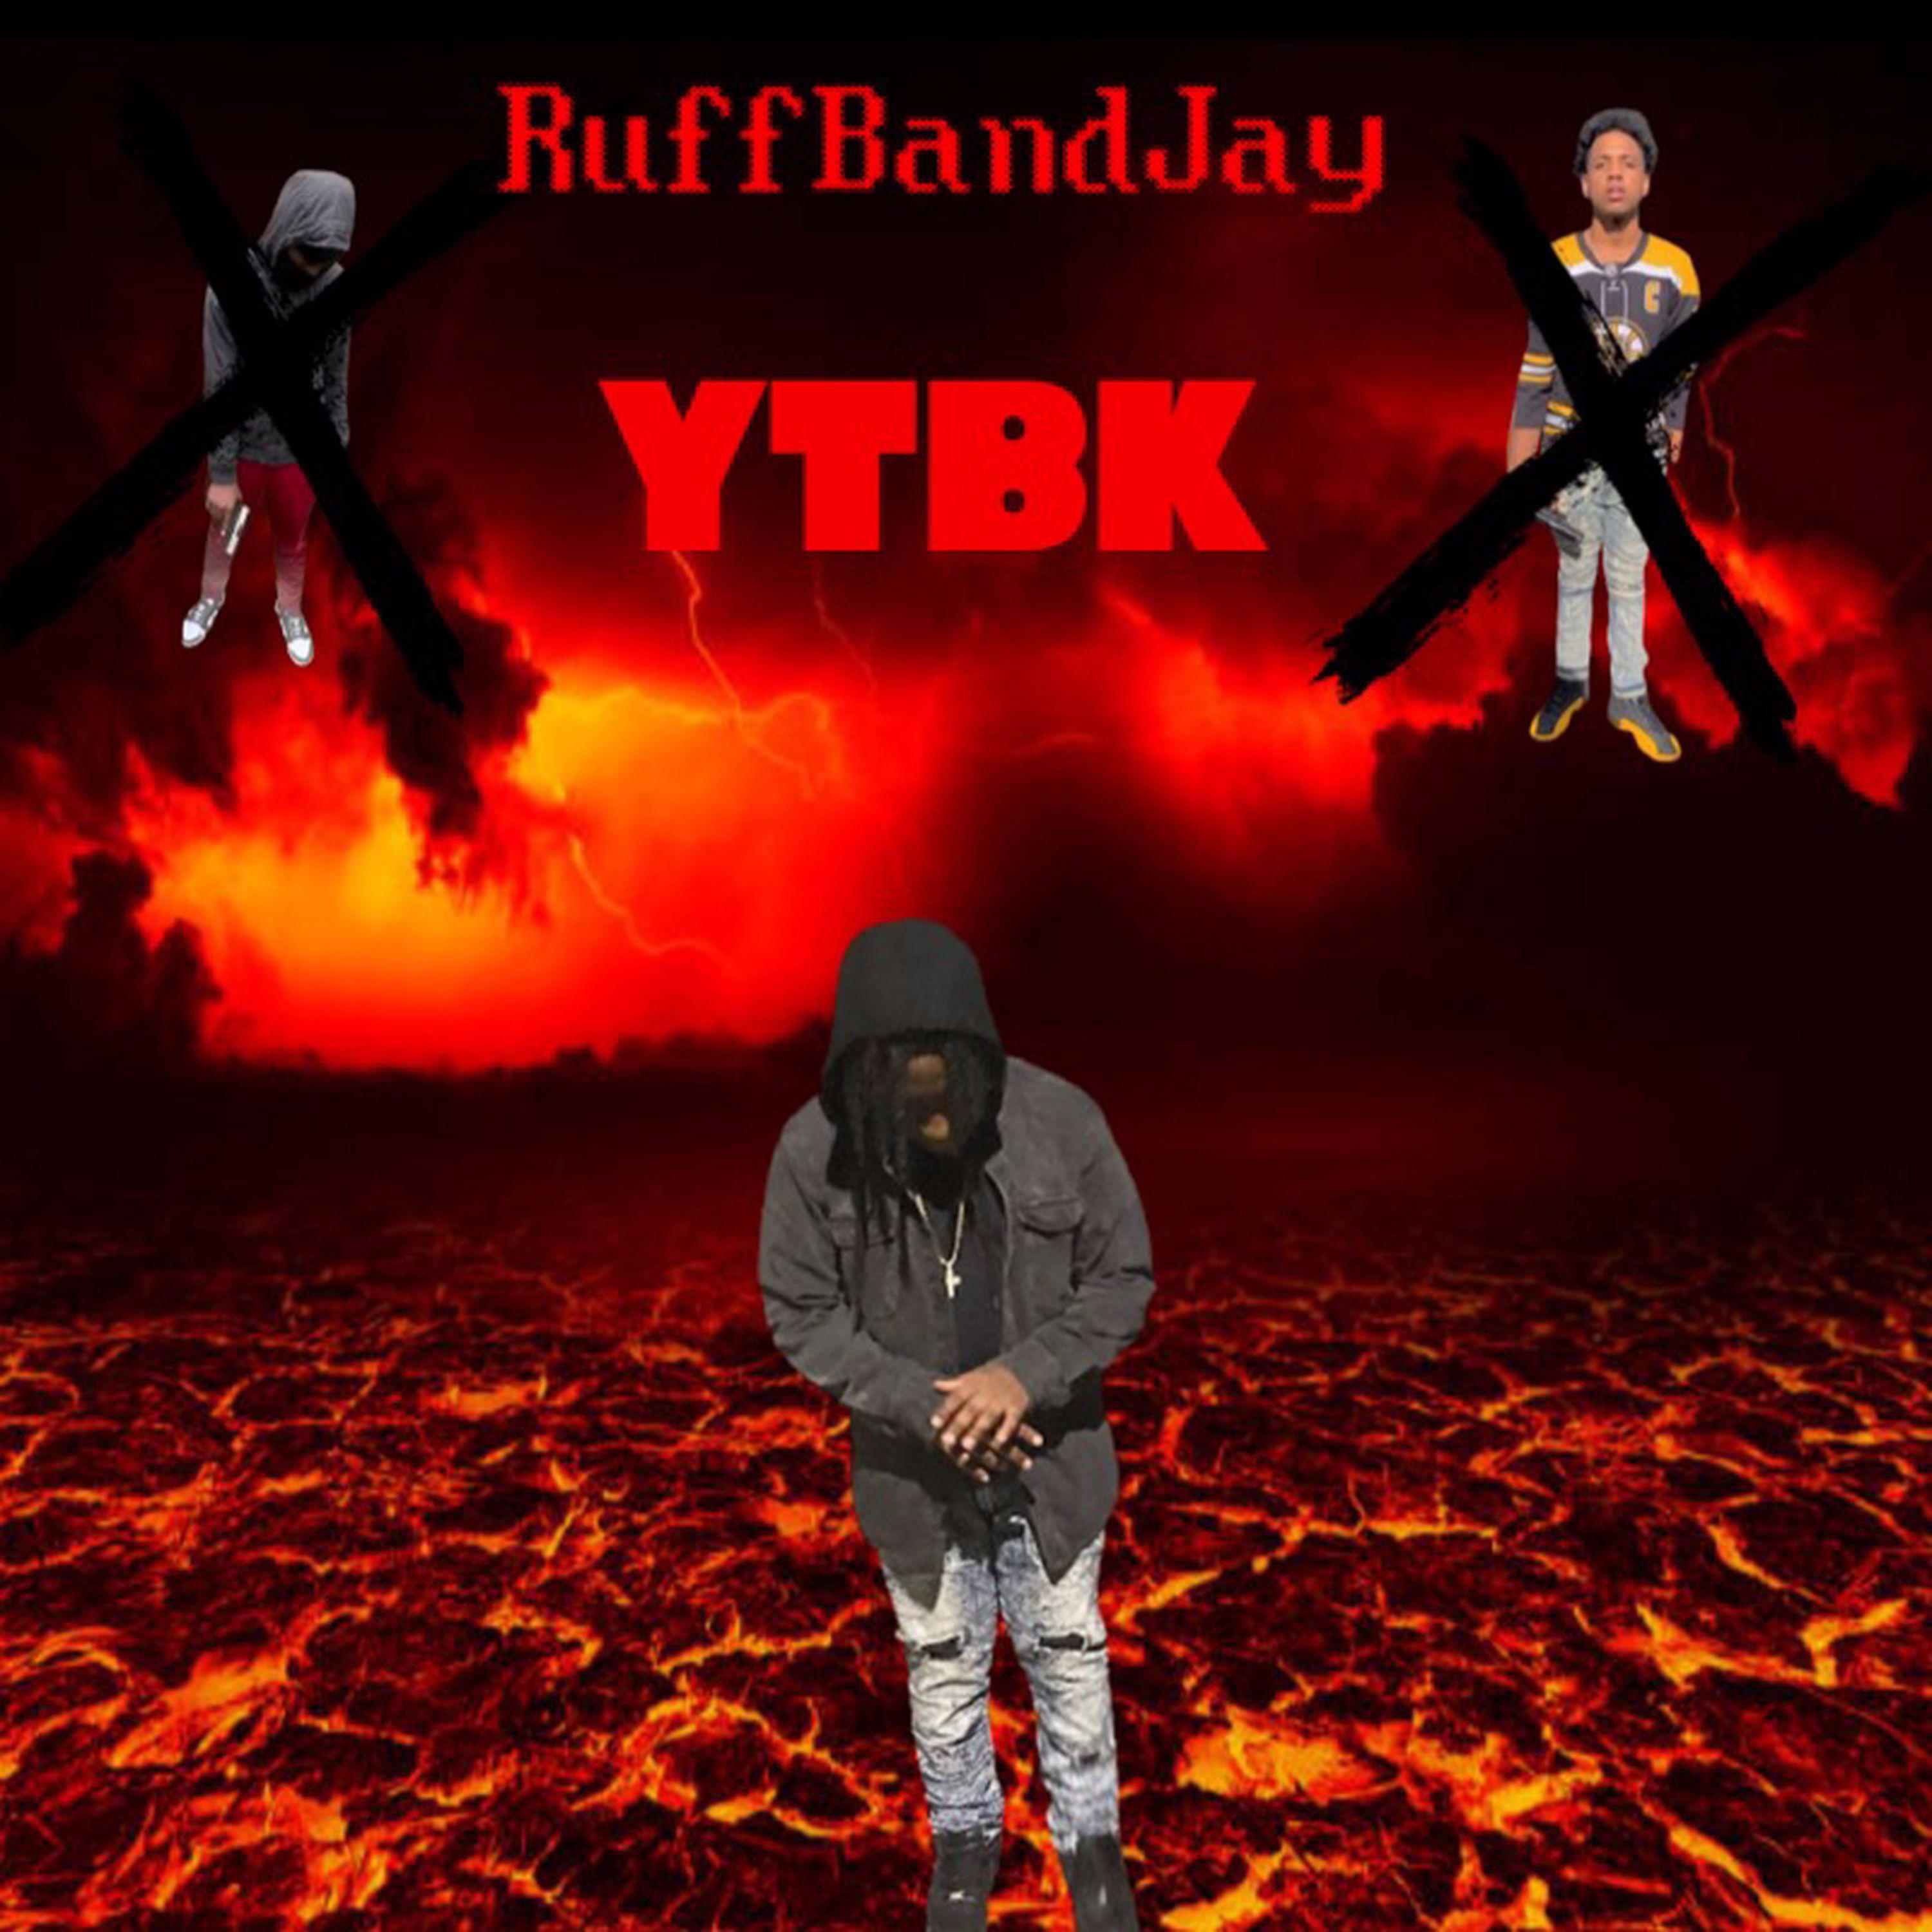 RuffbandJay - YTBK